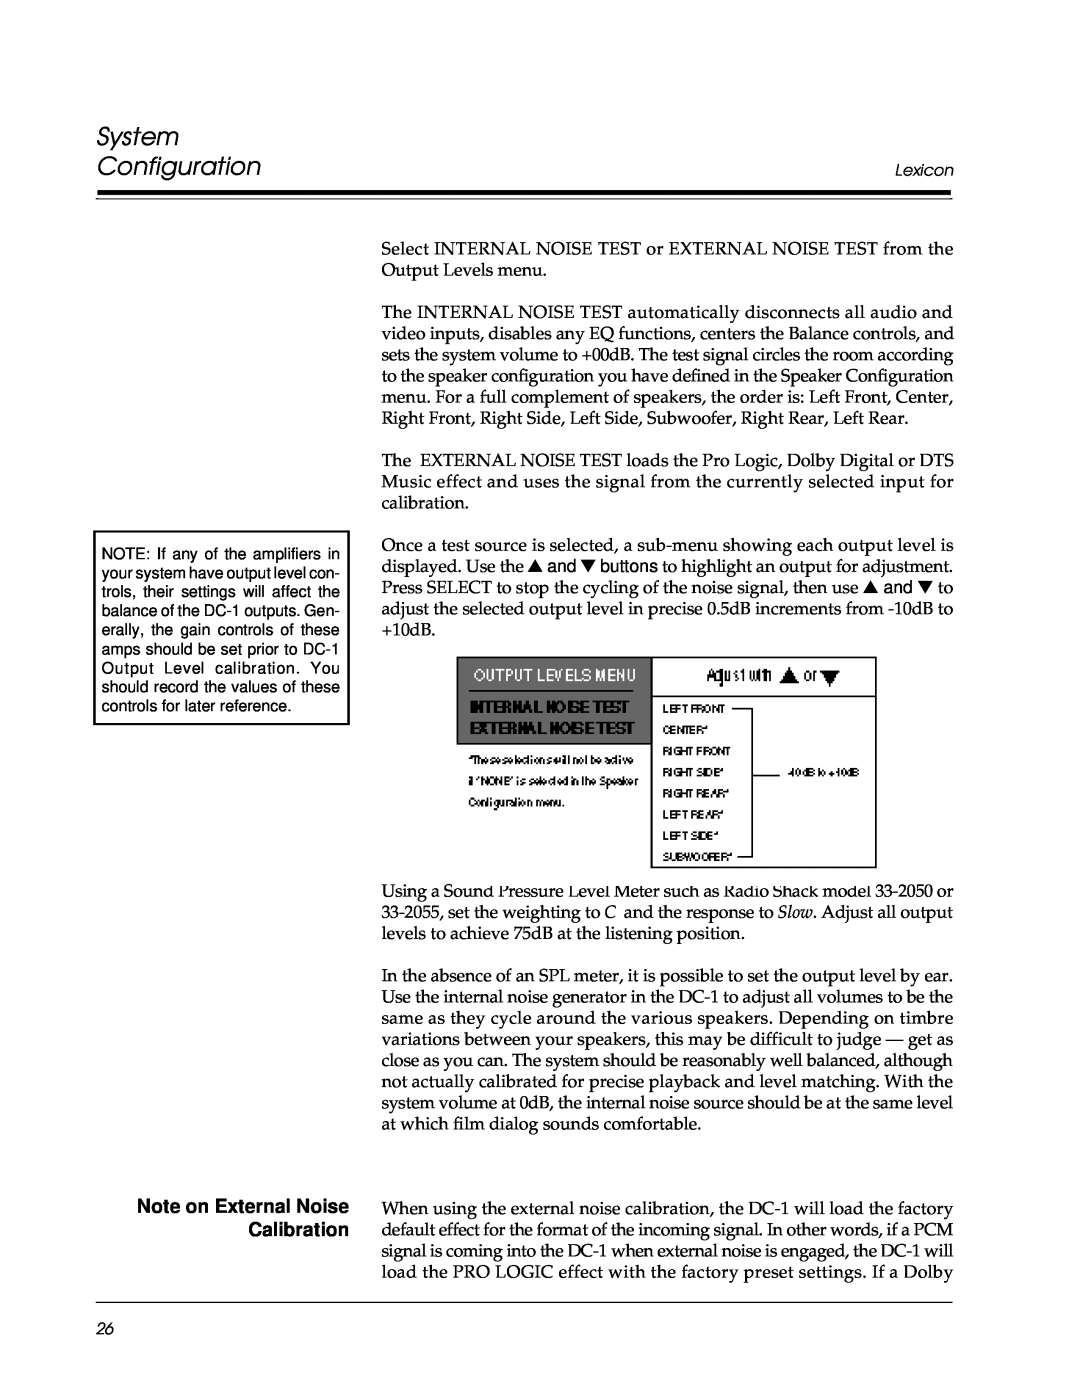 Lexicon Lexicon Part #070-13234 owner manual Note on External Noise Calibration, System Configuration 